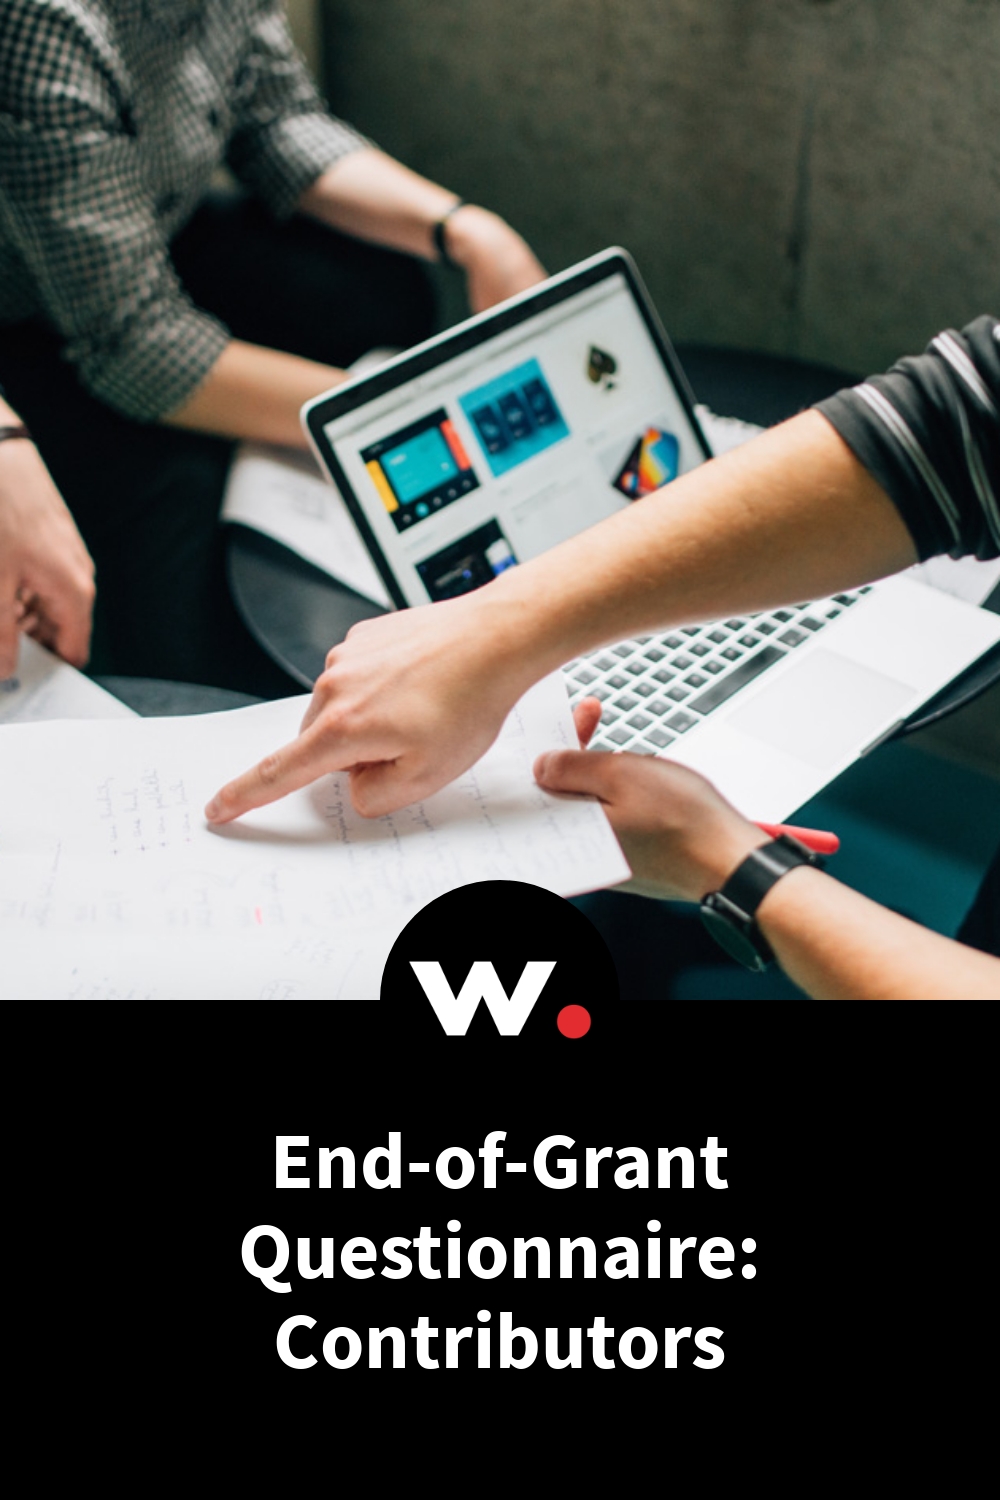 End-of-Grant Questionnaire: Contributors